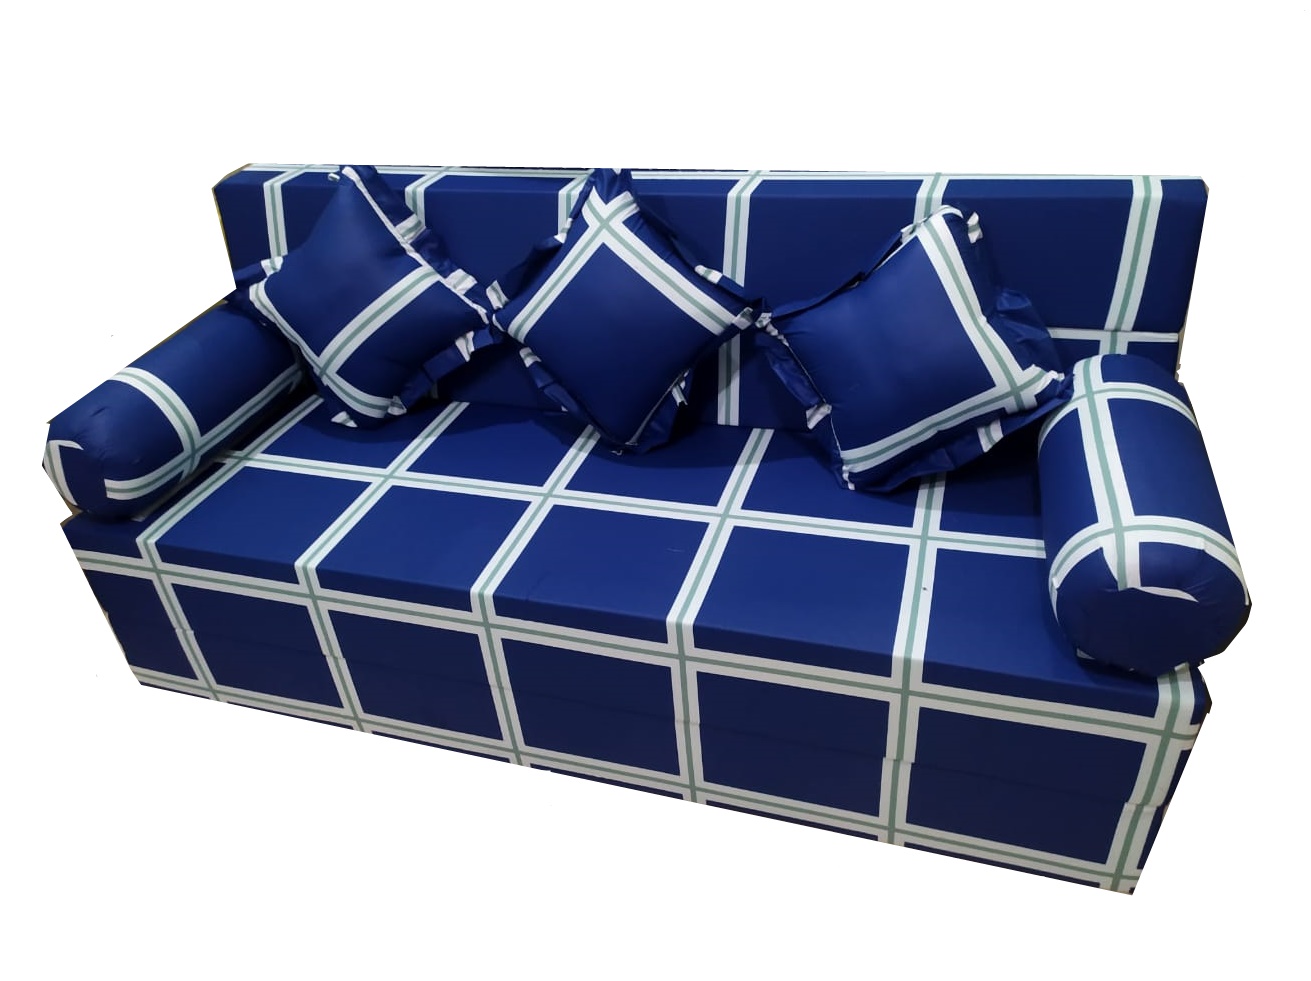 [ 200 x 180 x 15 ] Sofa Bed Inoac / Inoac Sofa Bed EON LG D23 Uk 200 x 180 x 15 cm / Sofa Bed Inoac Asli / Terlaris Sofabed Inoac Eon Lg d23 Uk 200 x 180 x 15 cm Anti Kempes